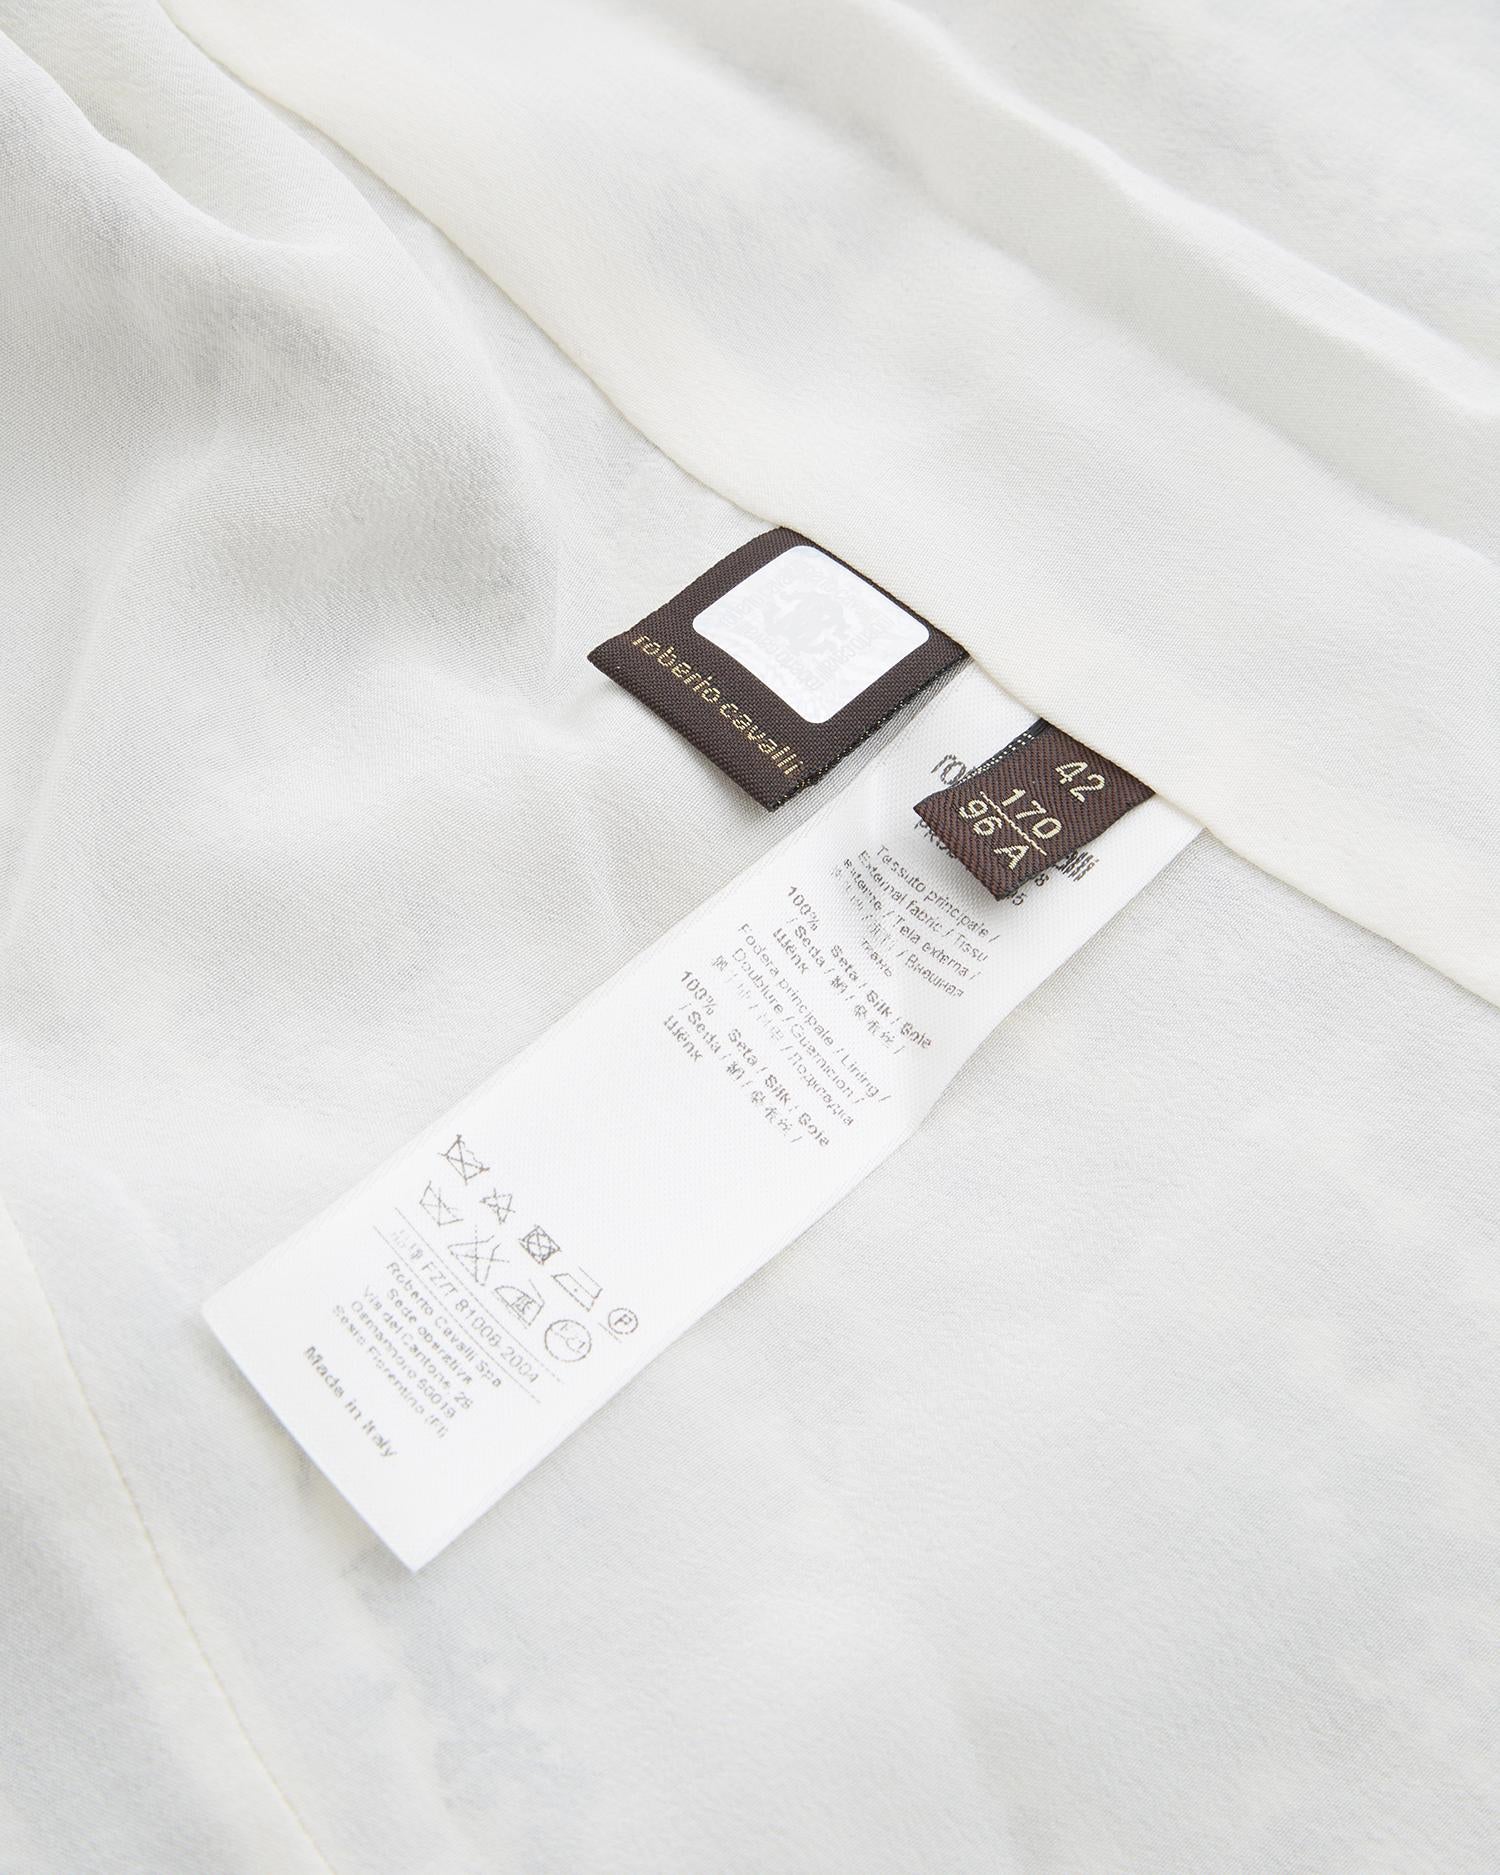 Roberto Cavalli silk printed blazer, resort 2014 For Sale 1